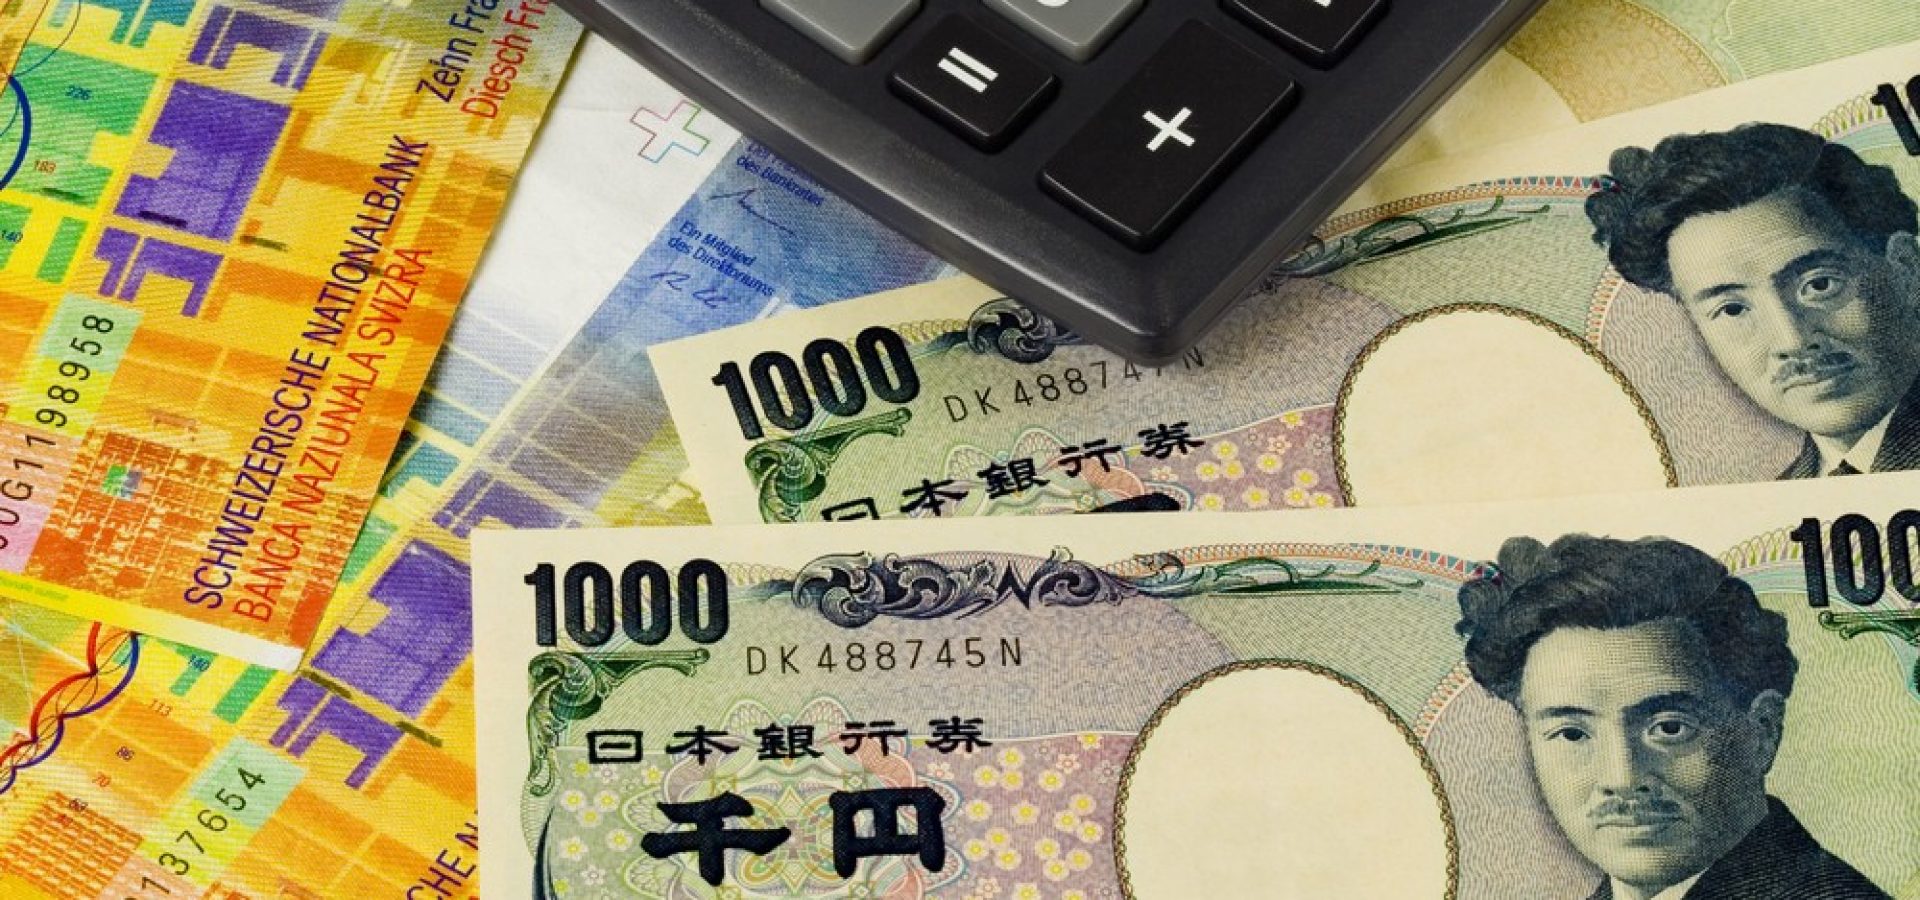 Washington: Japanese yen and Swiss franc bills and a calculator.